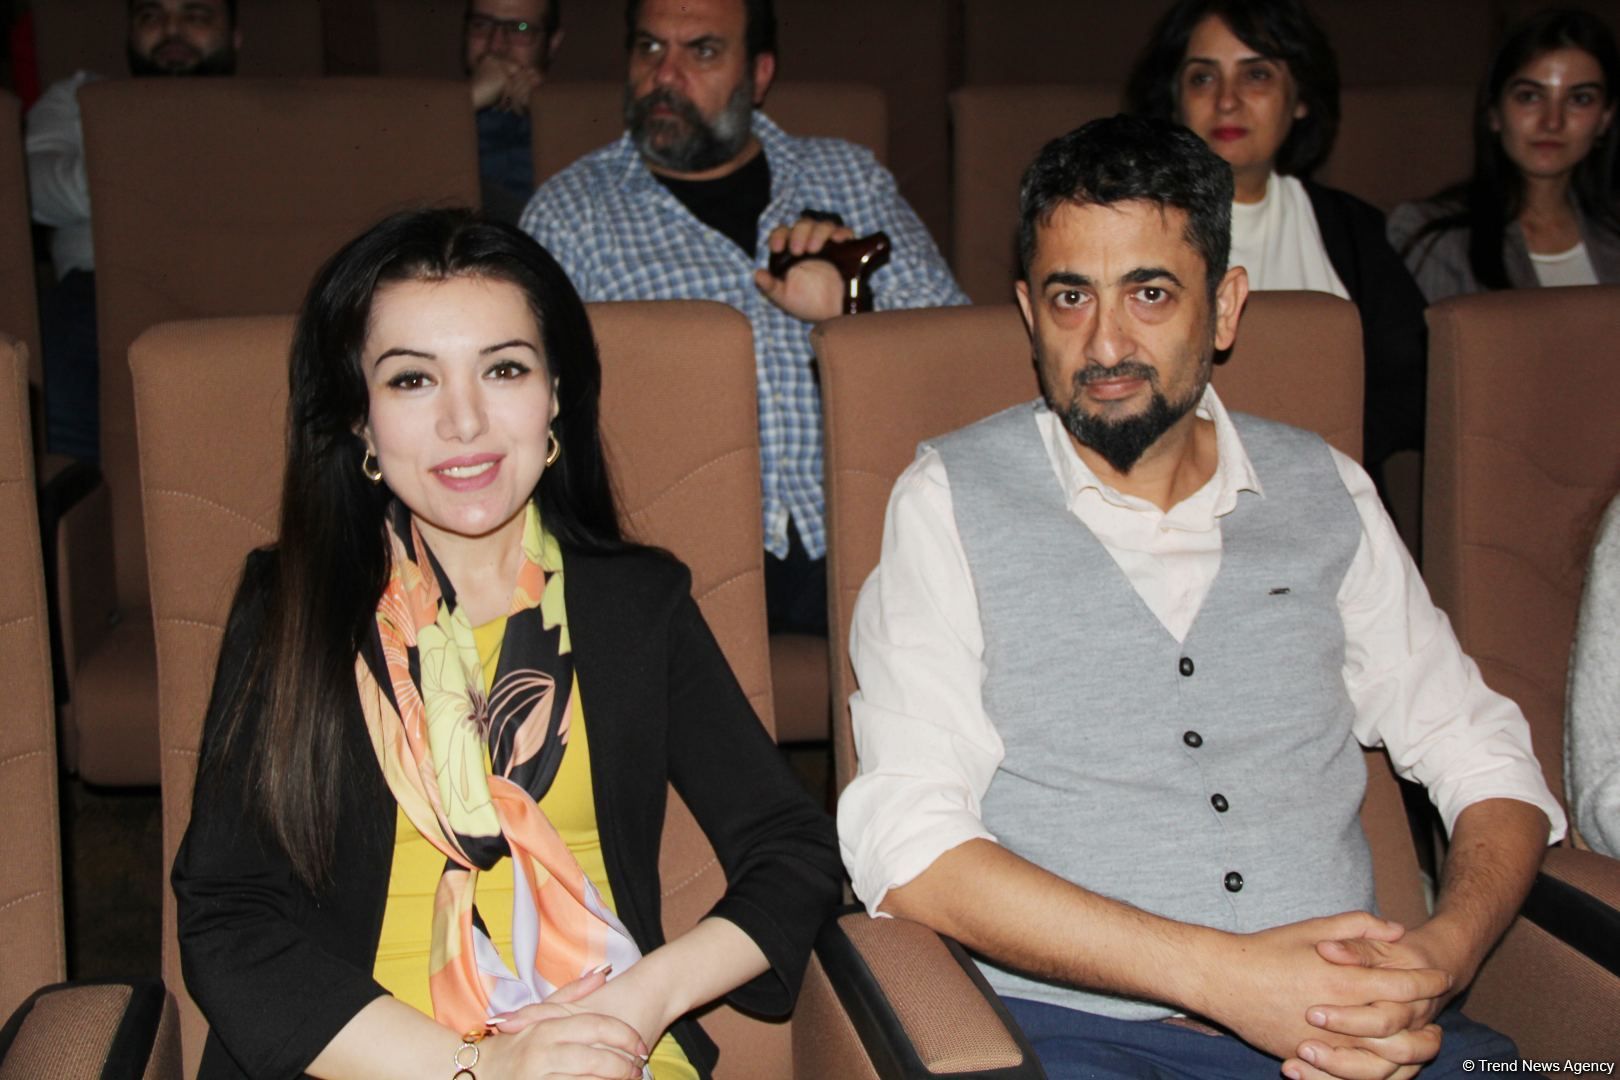 Baku Int'l Short Film Festival awards winners [PHOTO] - Gallery Image